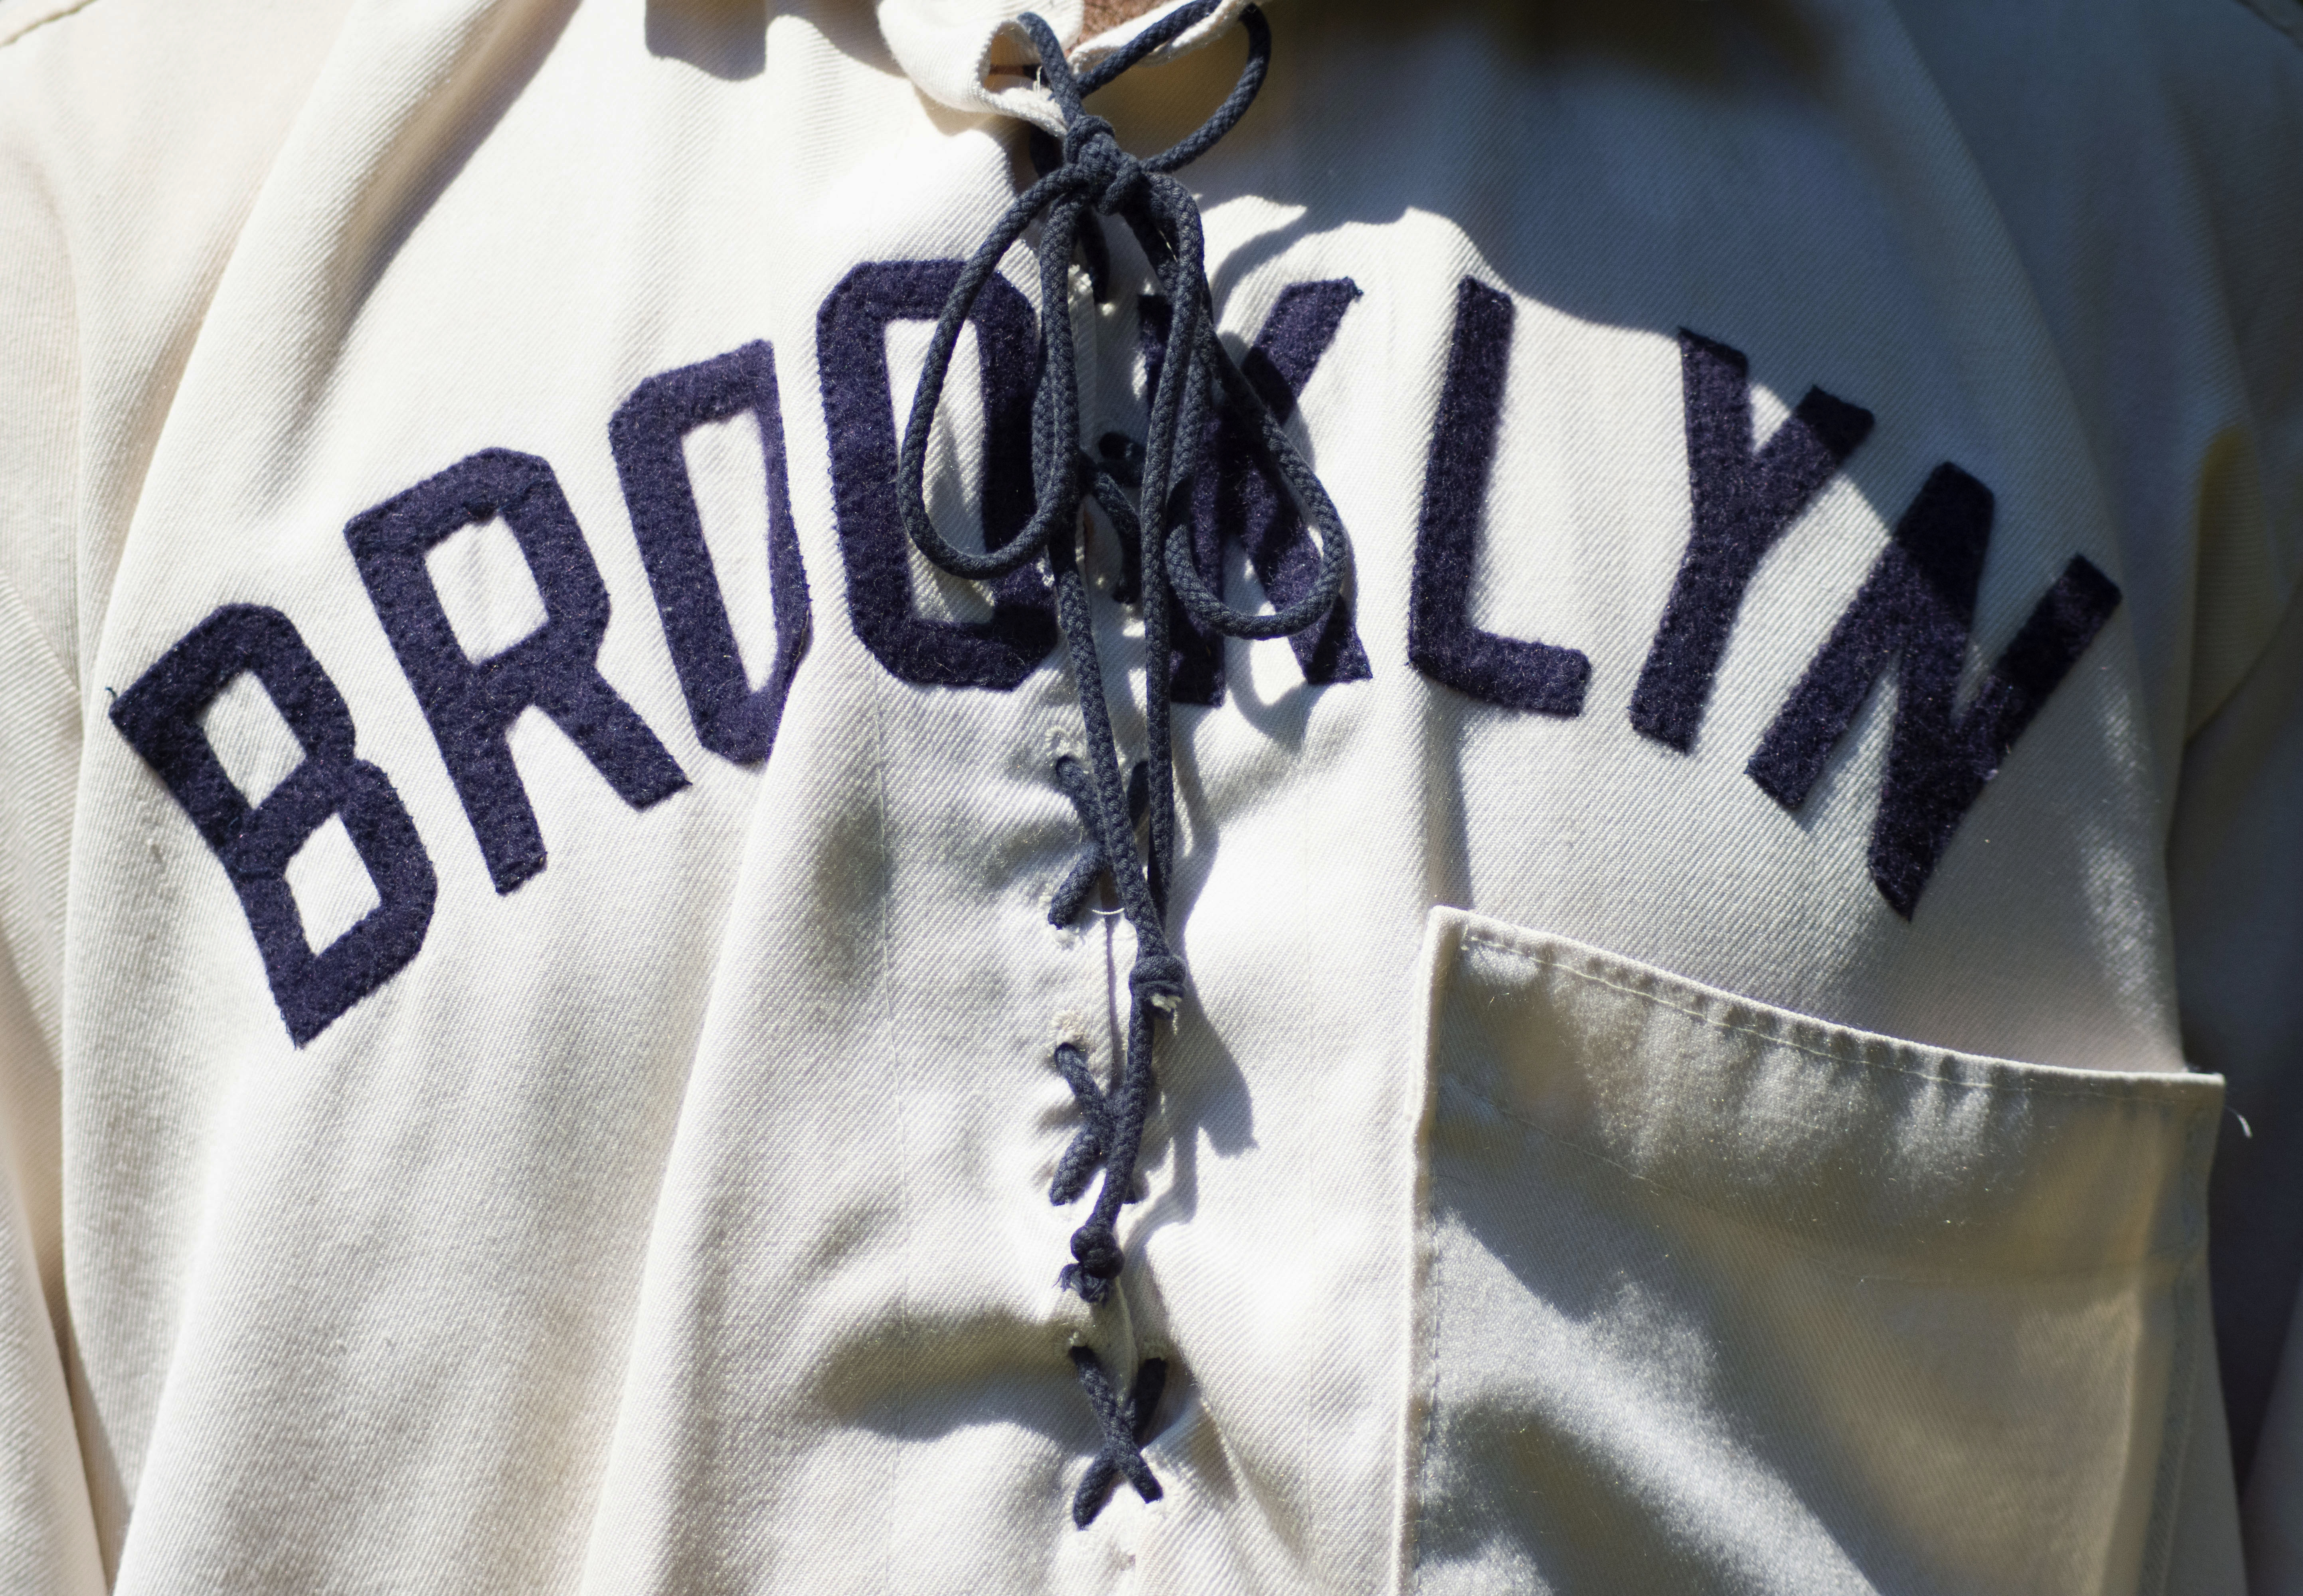 The Brooklyn Atlantics' traditional uniform